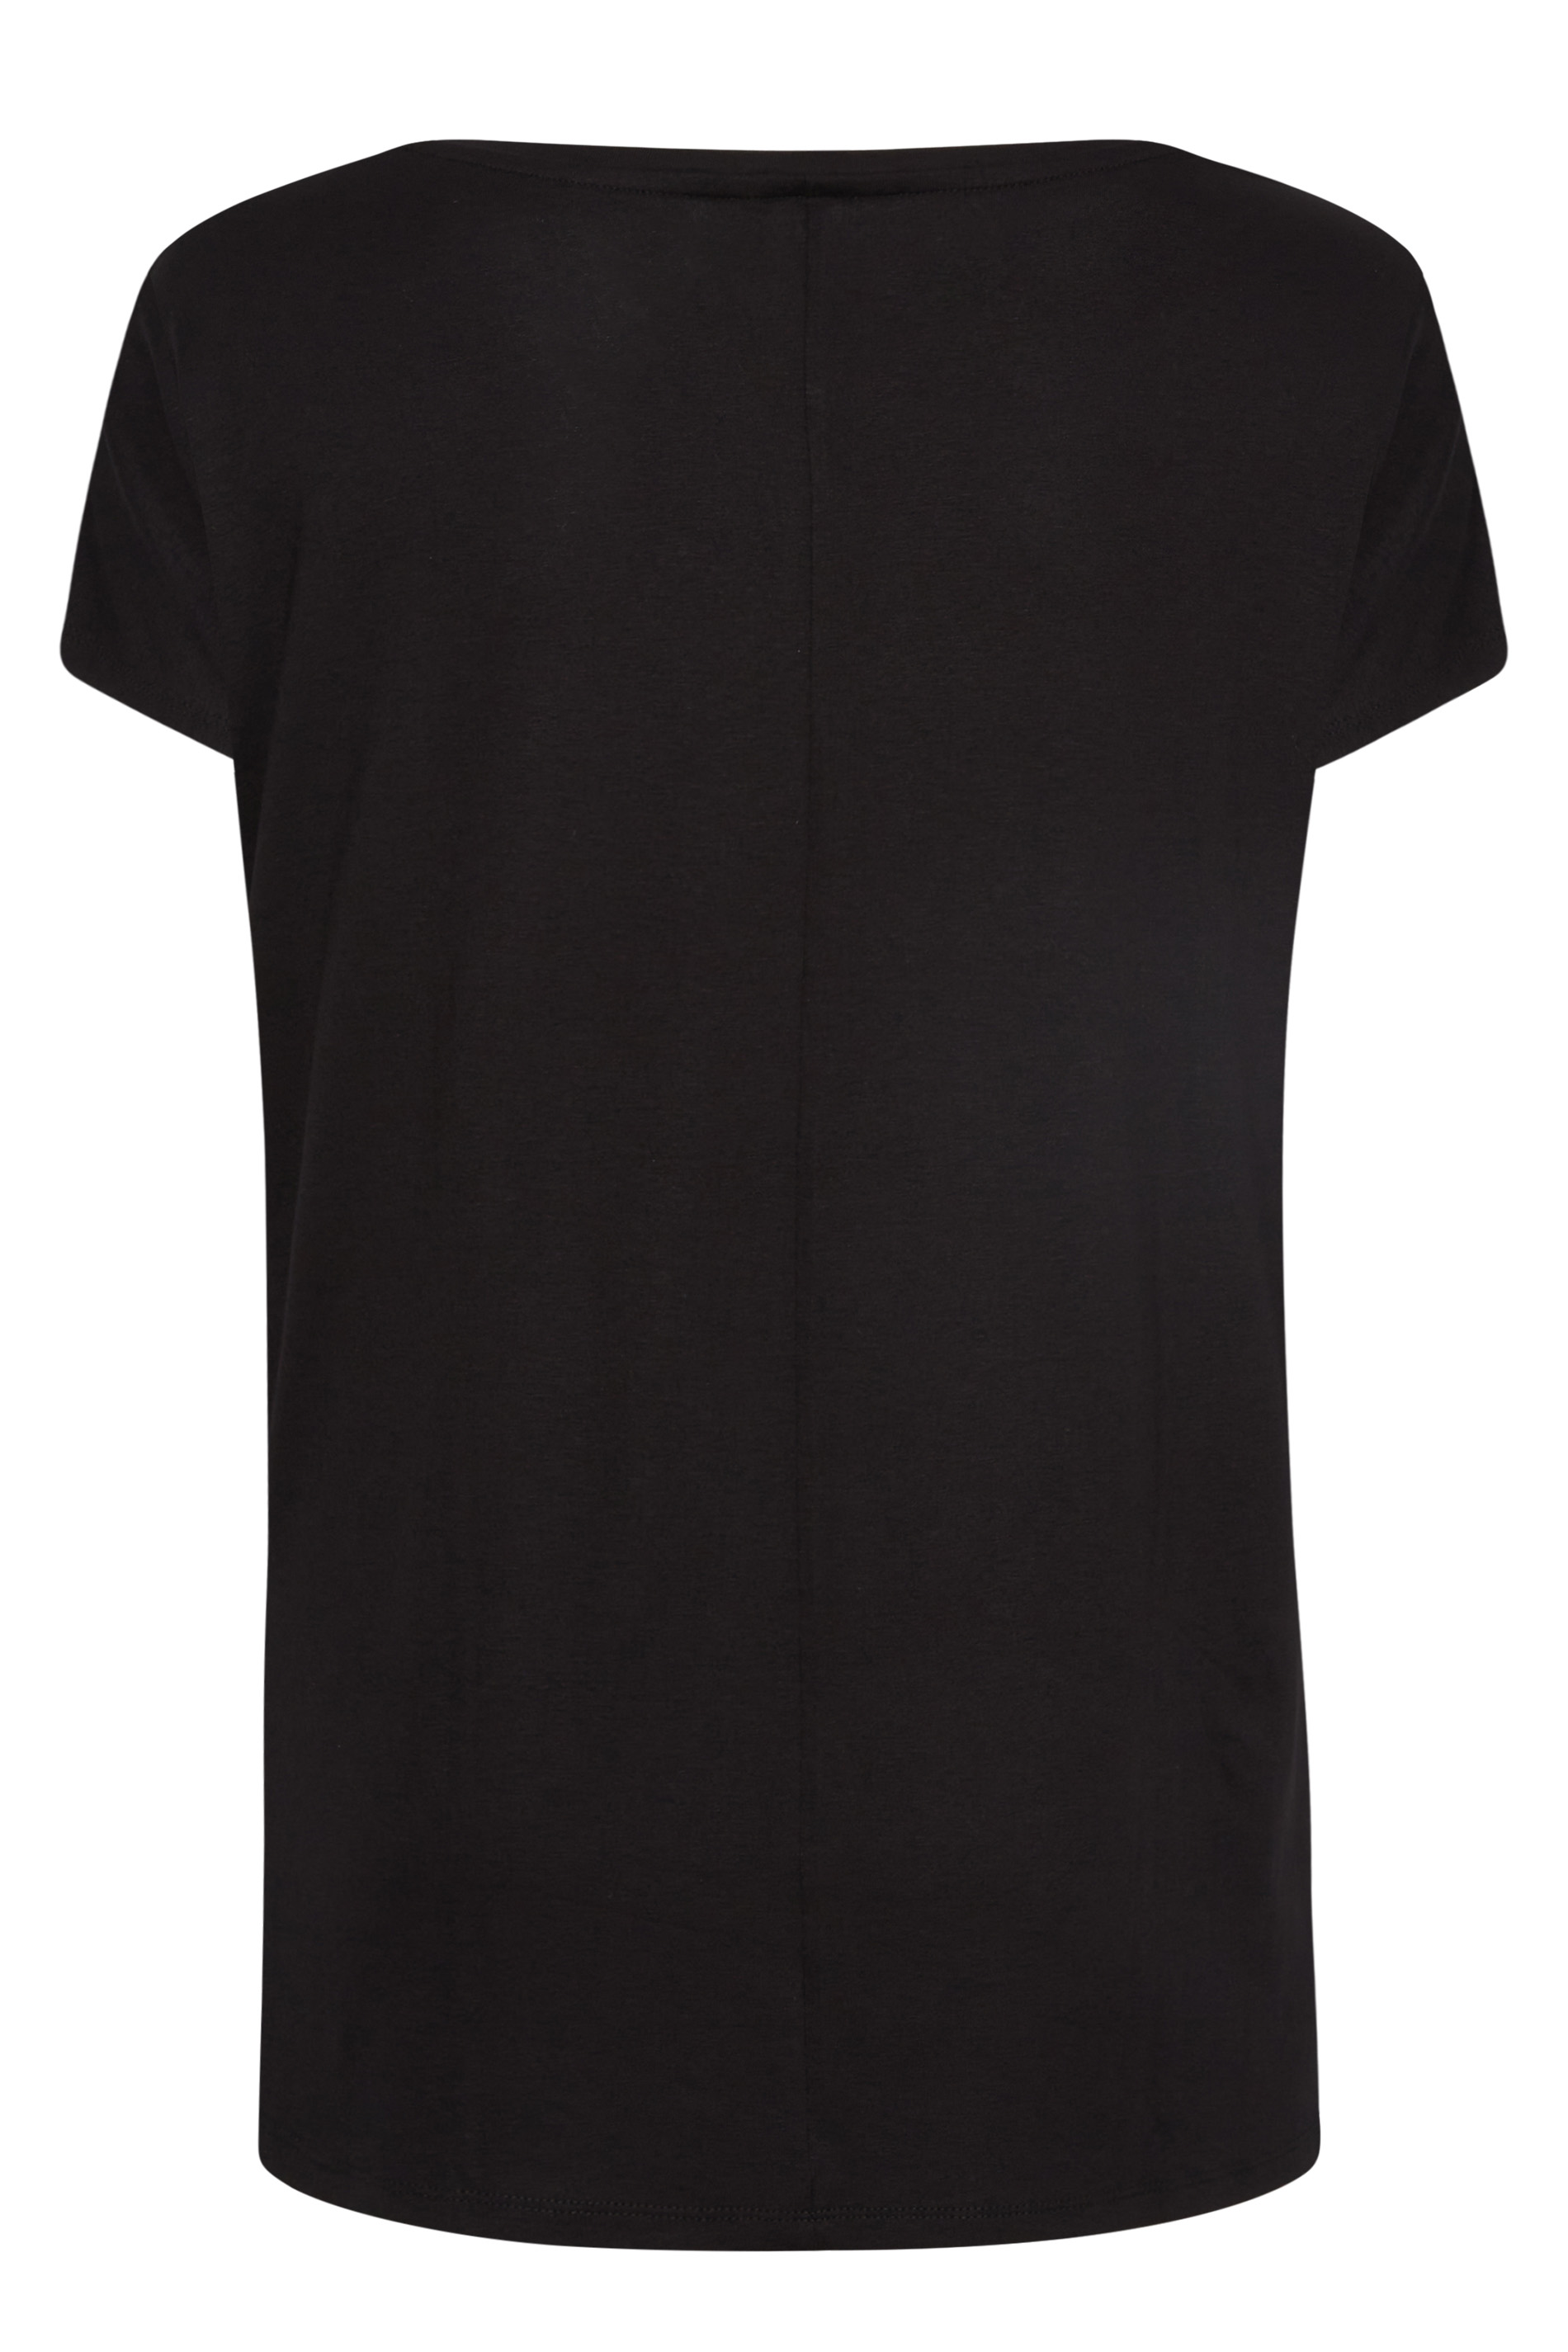 Grande taille  Tops Grande taille  Tops Jersey | T-Shirt Noir Coeurs Léopard en Jersey - OA43181